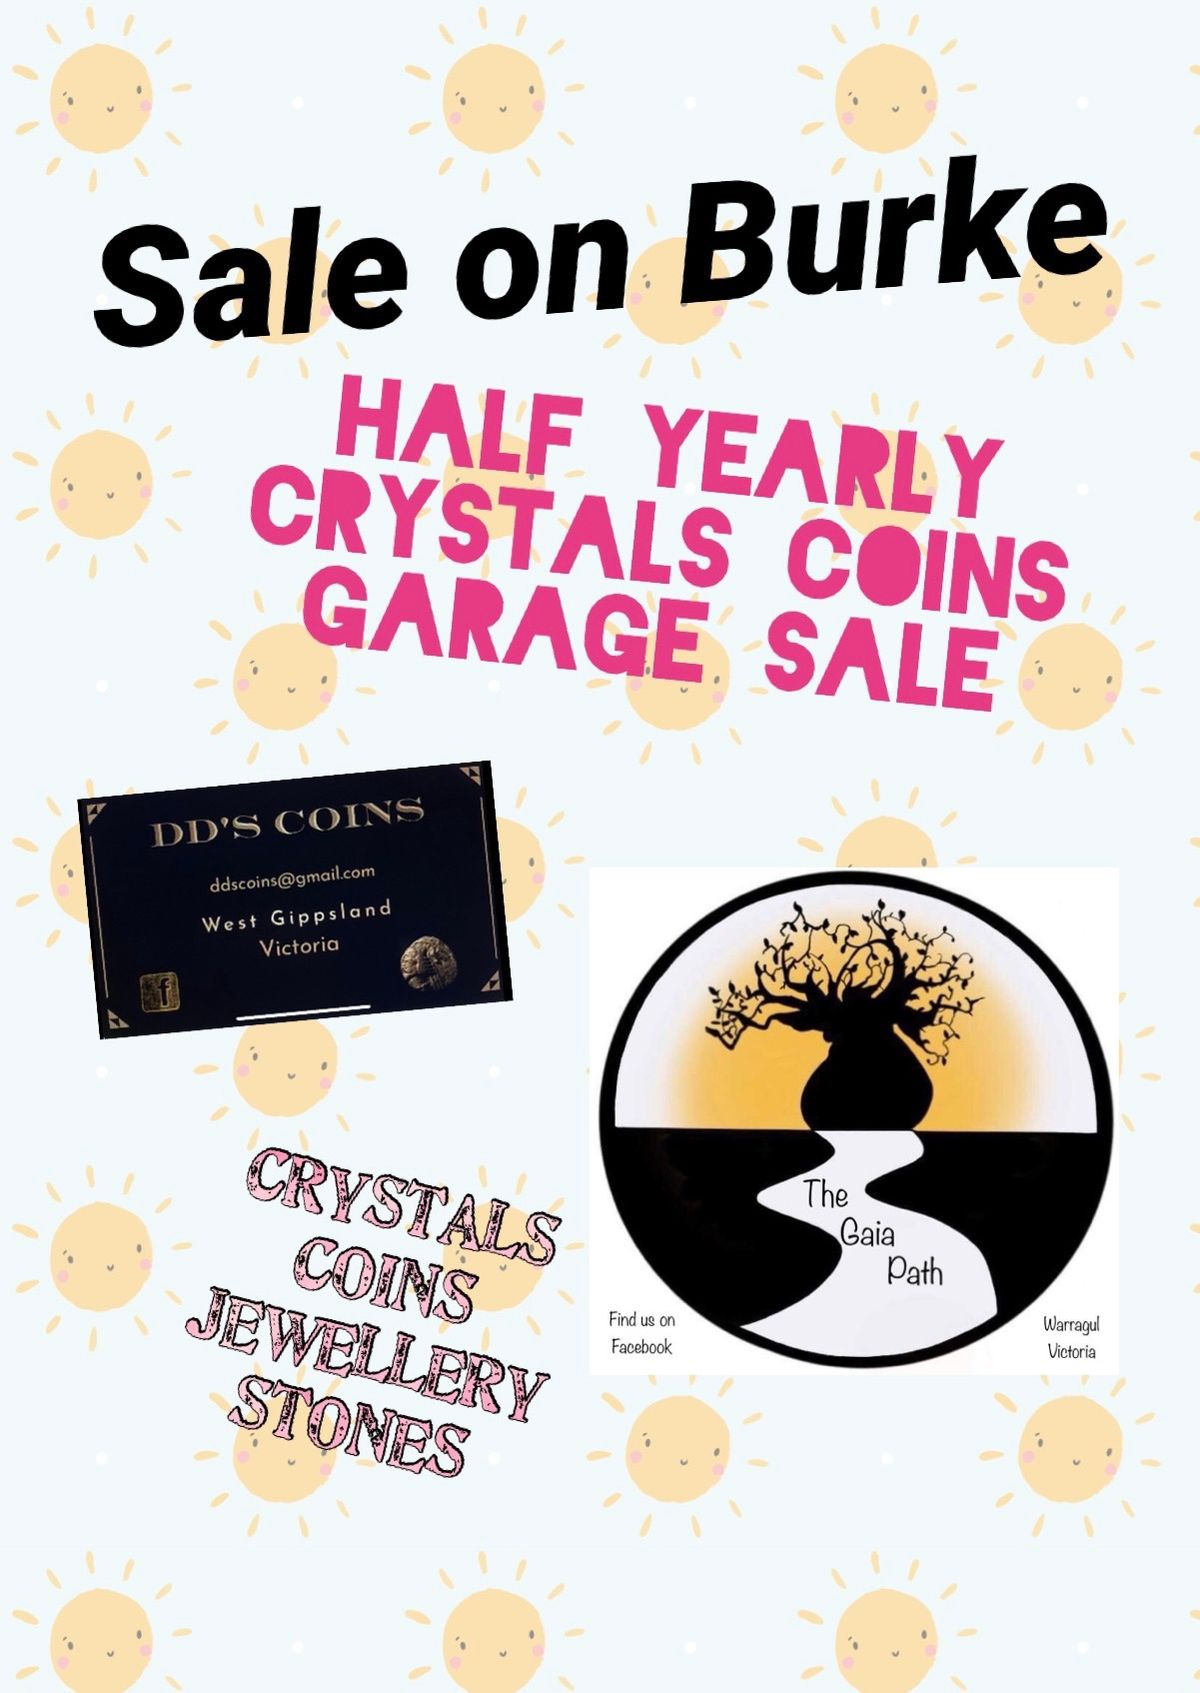 Pop up sale .. Annual \u201csale on Burke\u201d Crystal & coins garage sale 